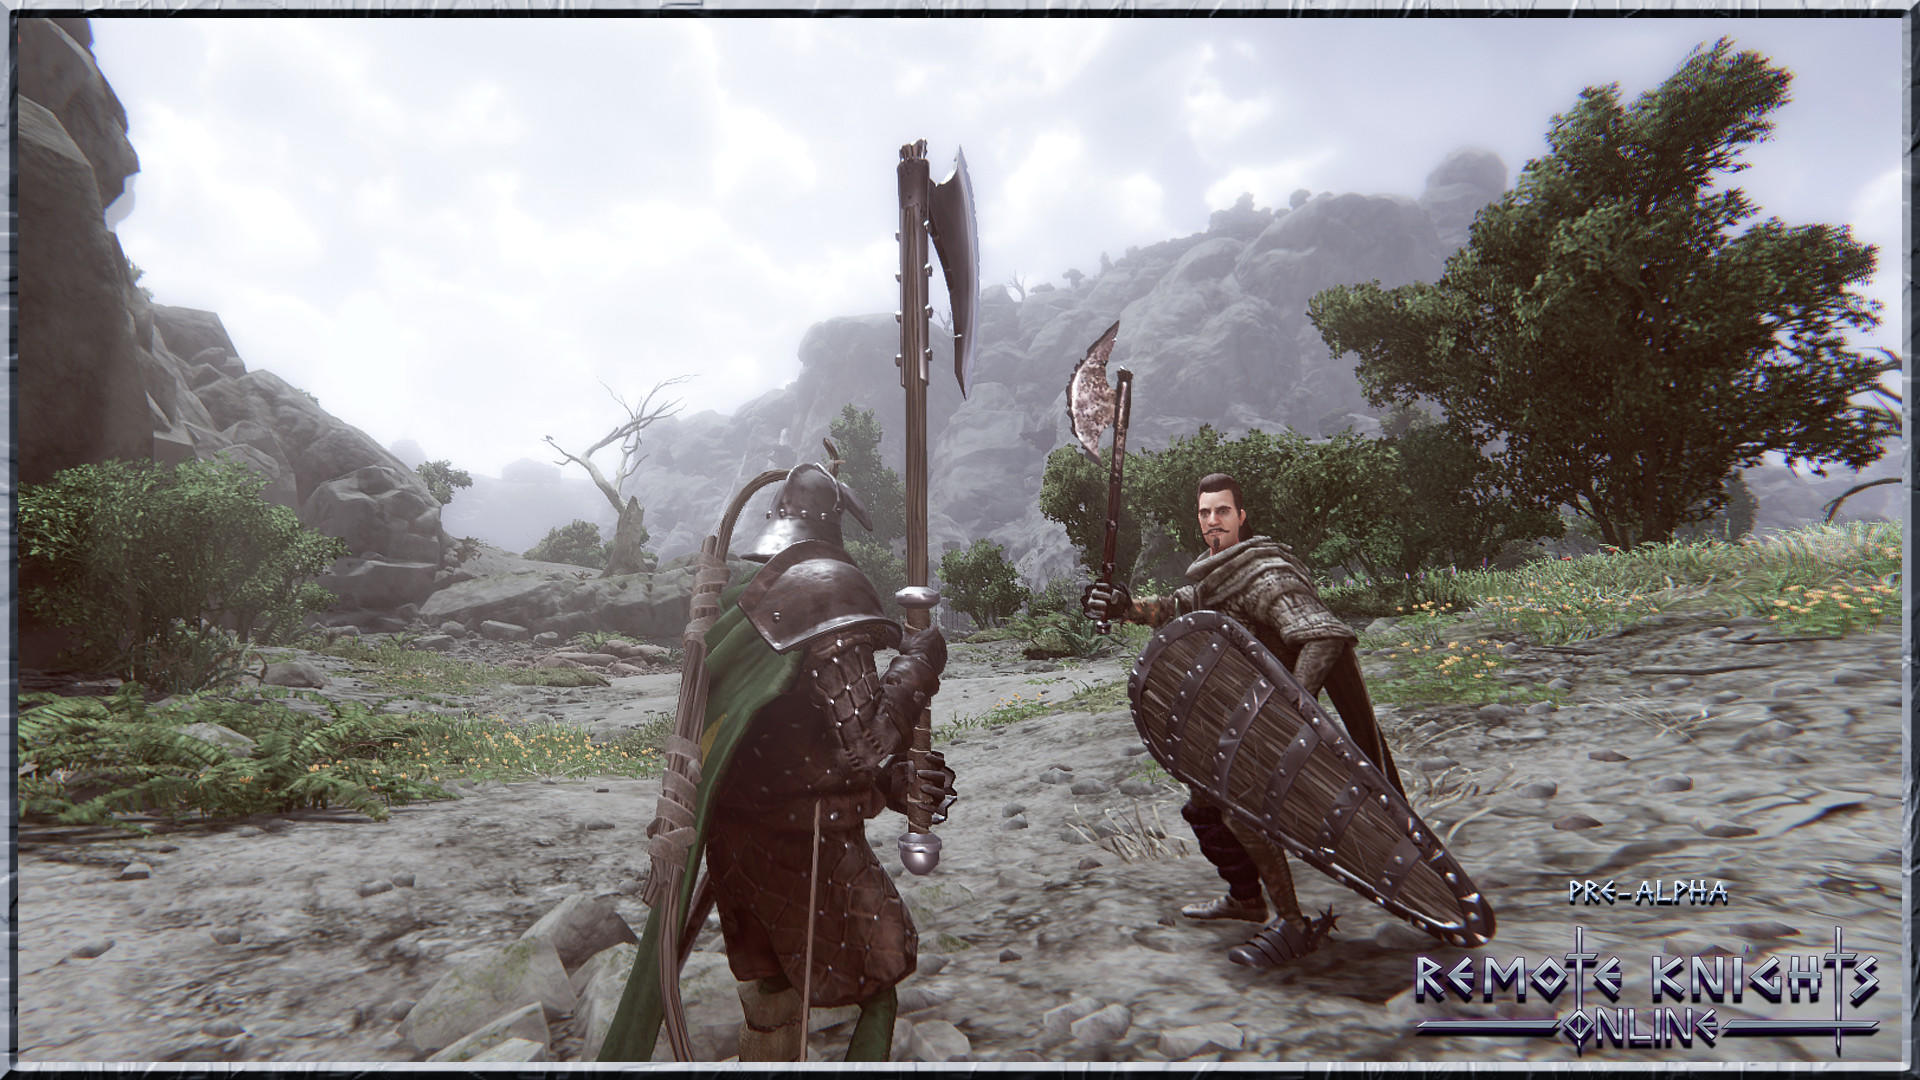 Screenshot 1 of Remote Knights အွန်လိုင်း 